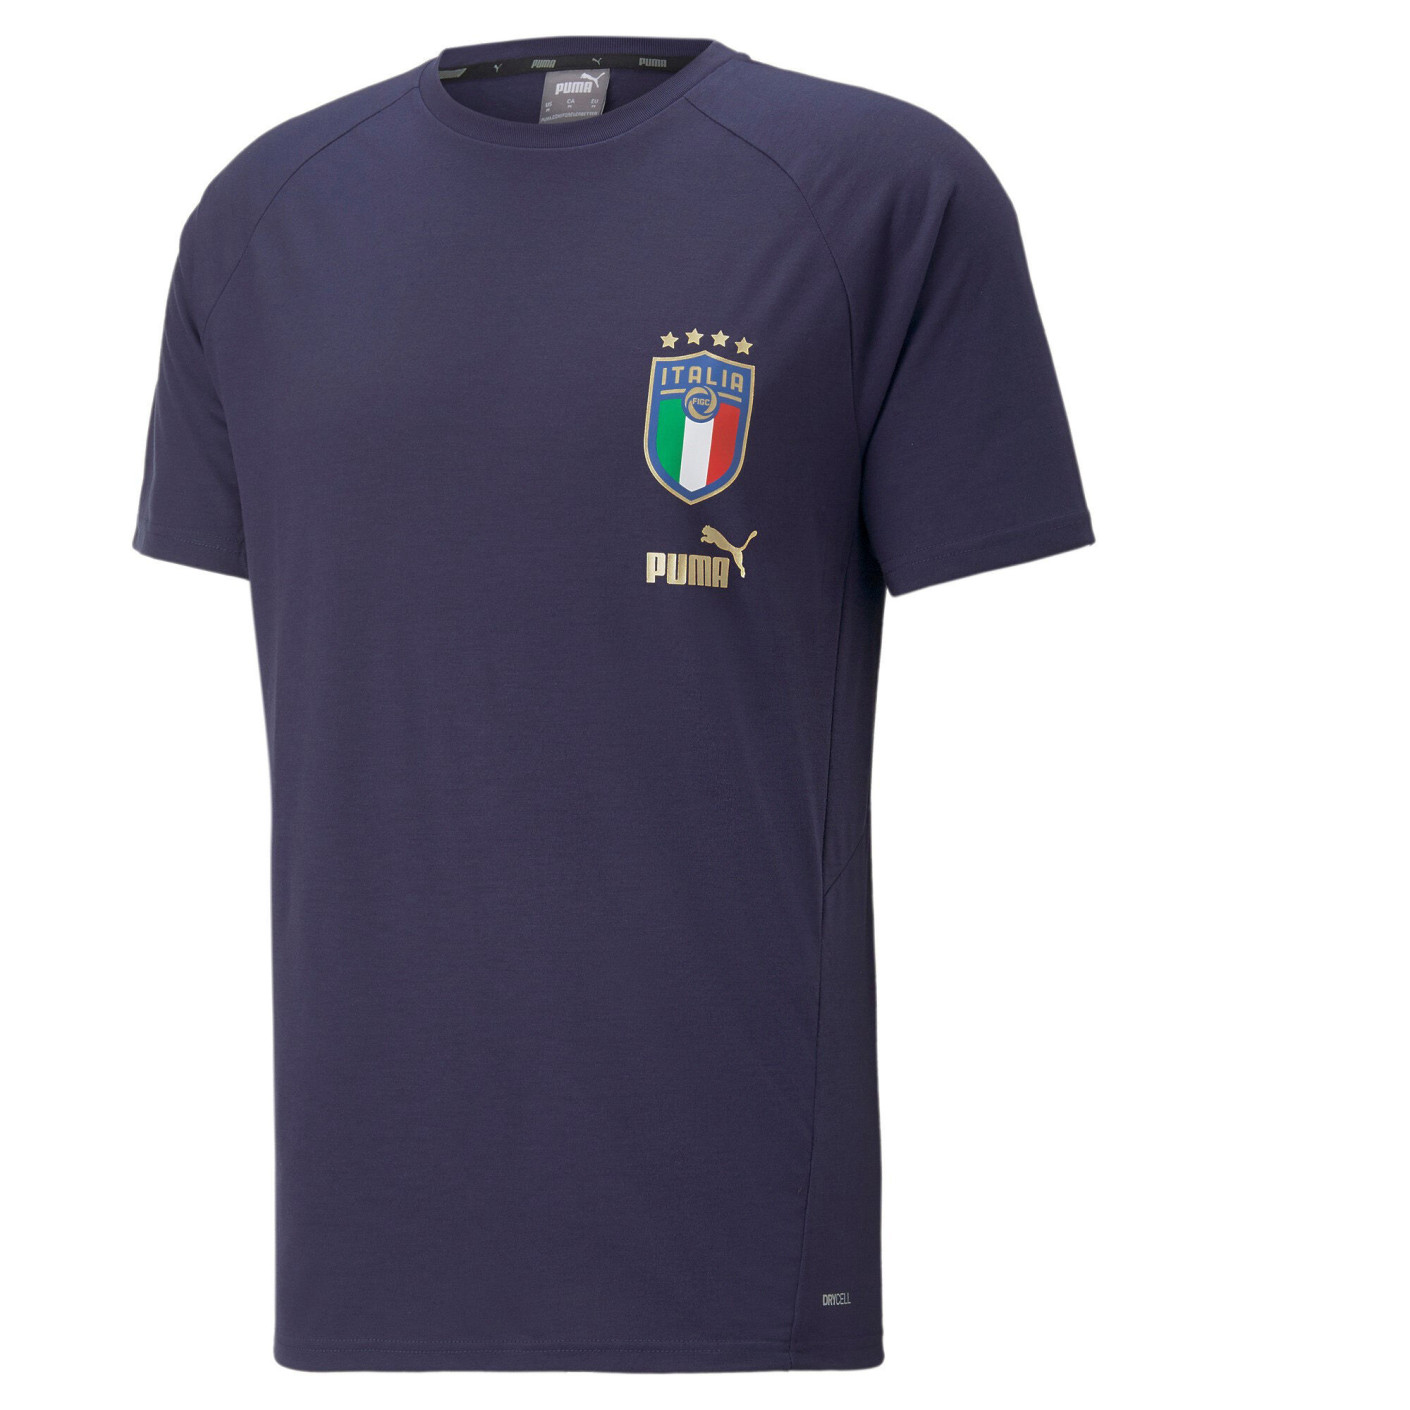 PUMA Italië Casual T-Shirt Donkerblauw Goud